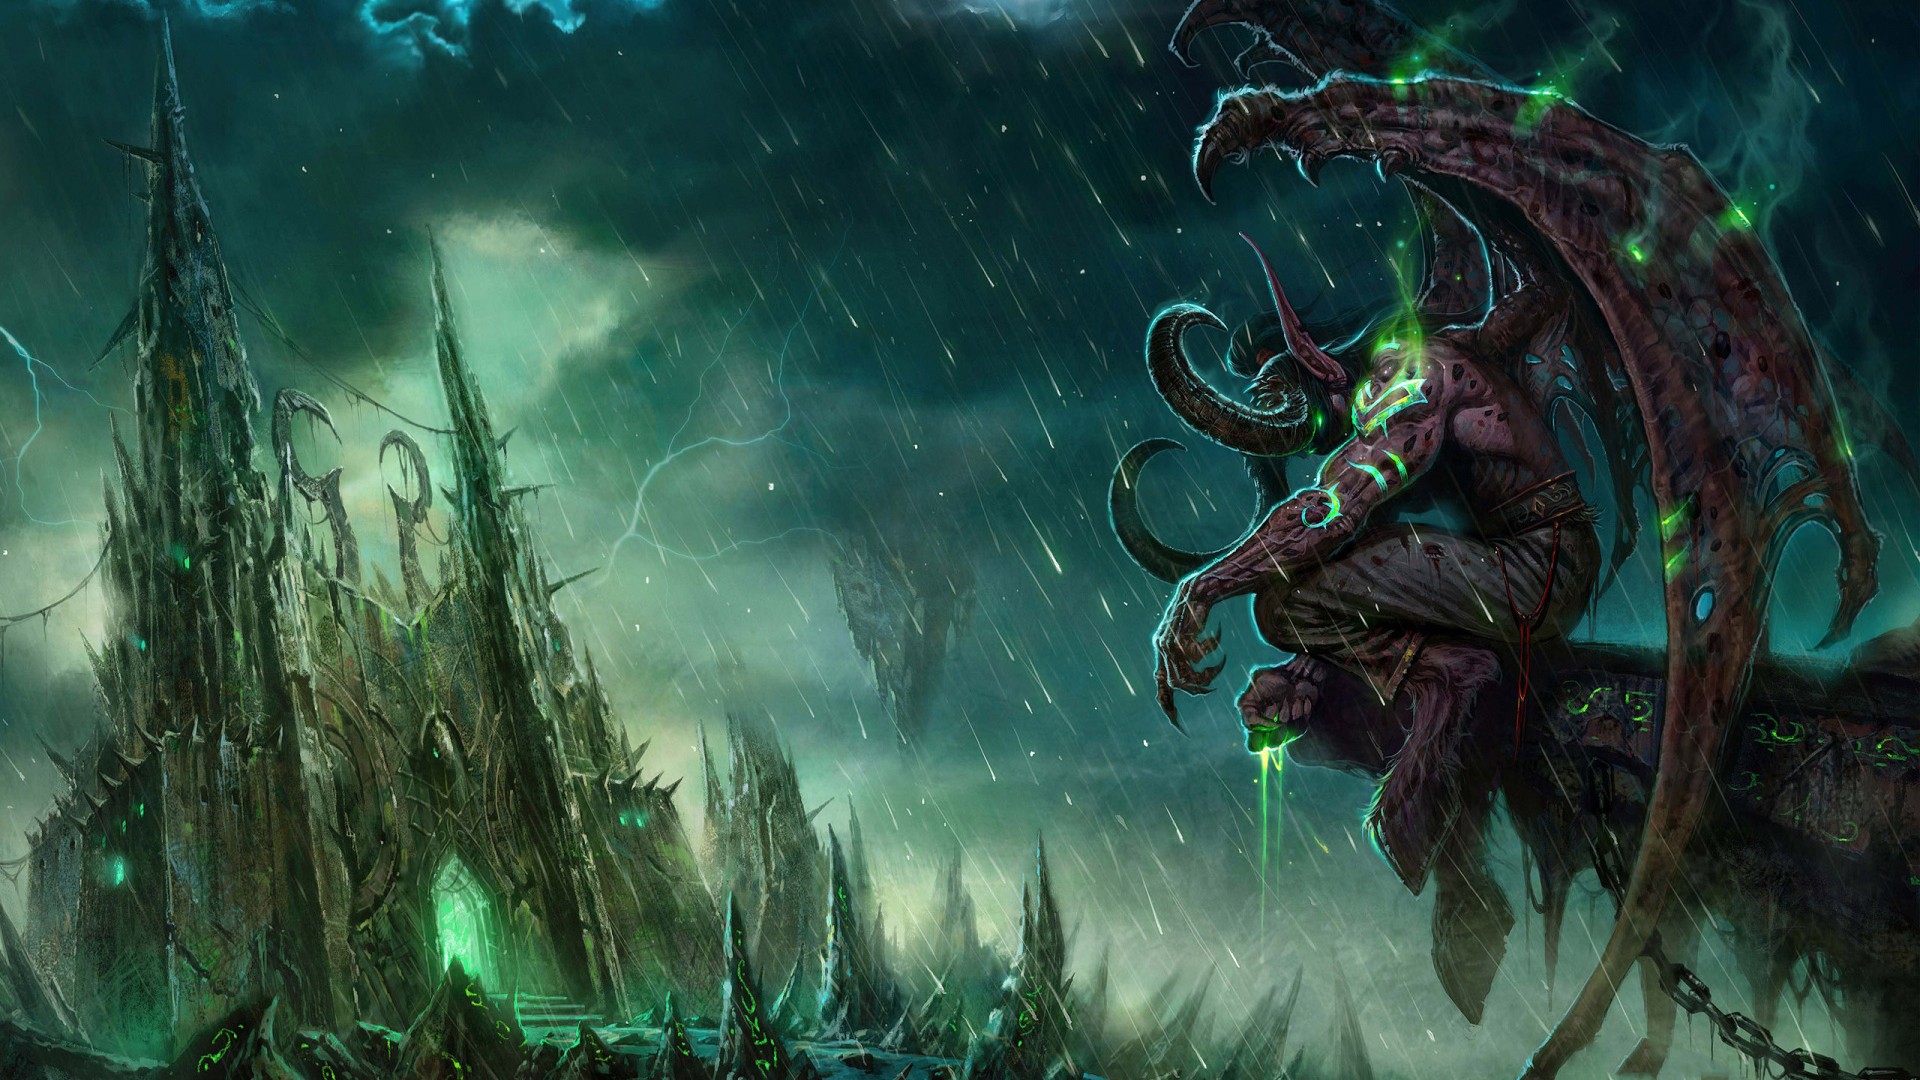 Fantasy Art World Of Warcraft Illidan Stormrage Black Temple Video Games 1920x1080